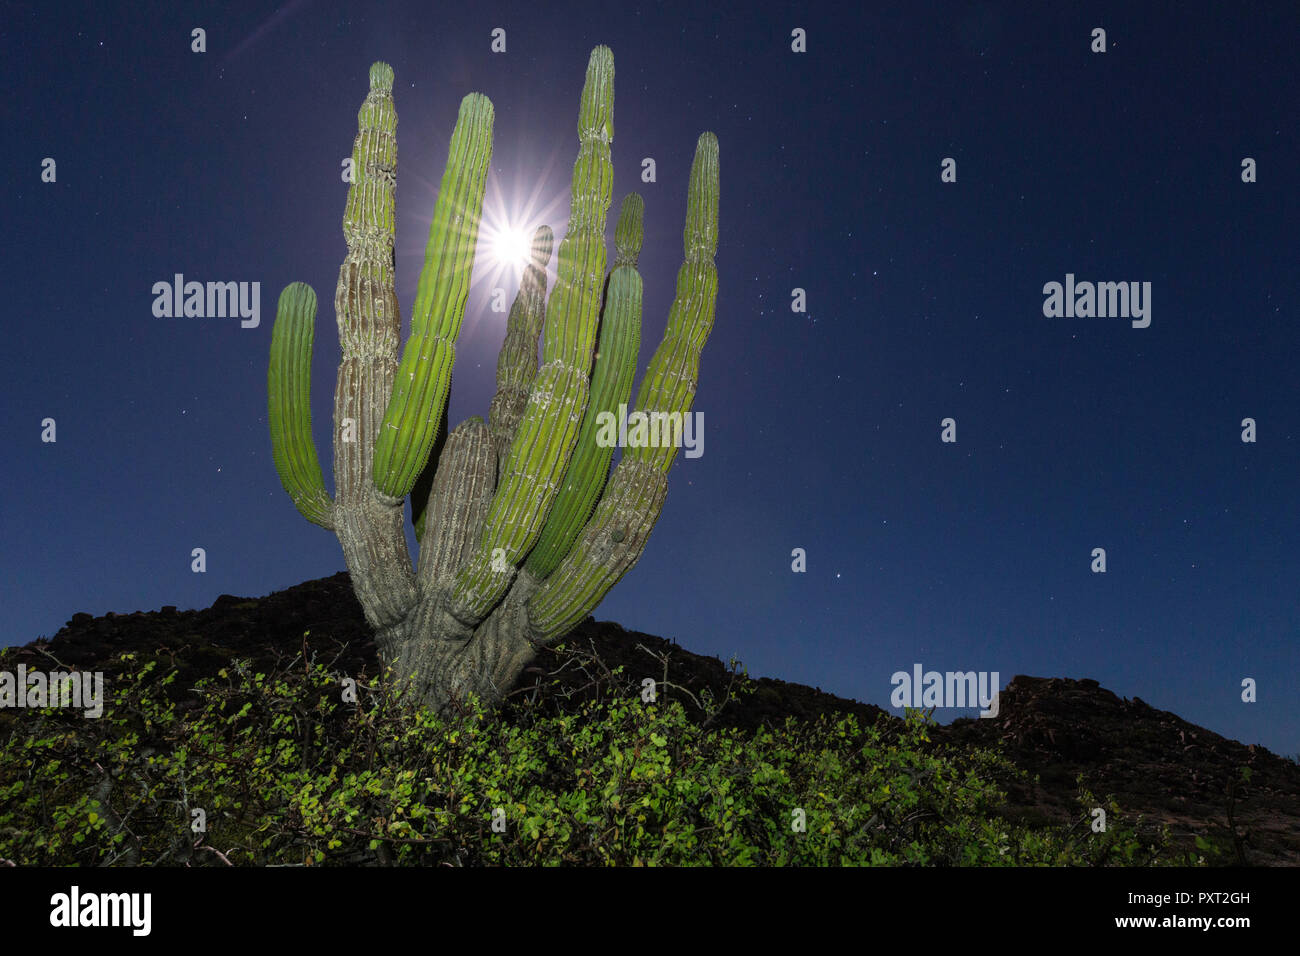 Cardon cactus, Pachycereus pringlei, at night under a full moon in Bahia Bonanza, BCS, Mexico Stock Photo